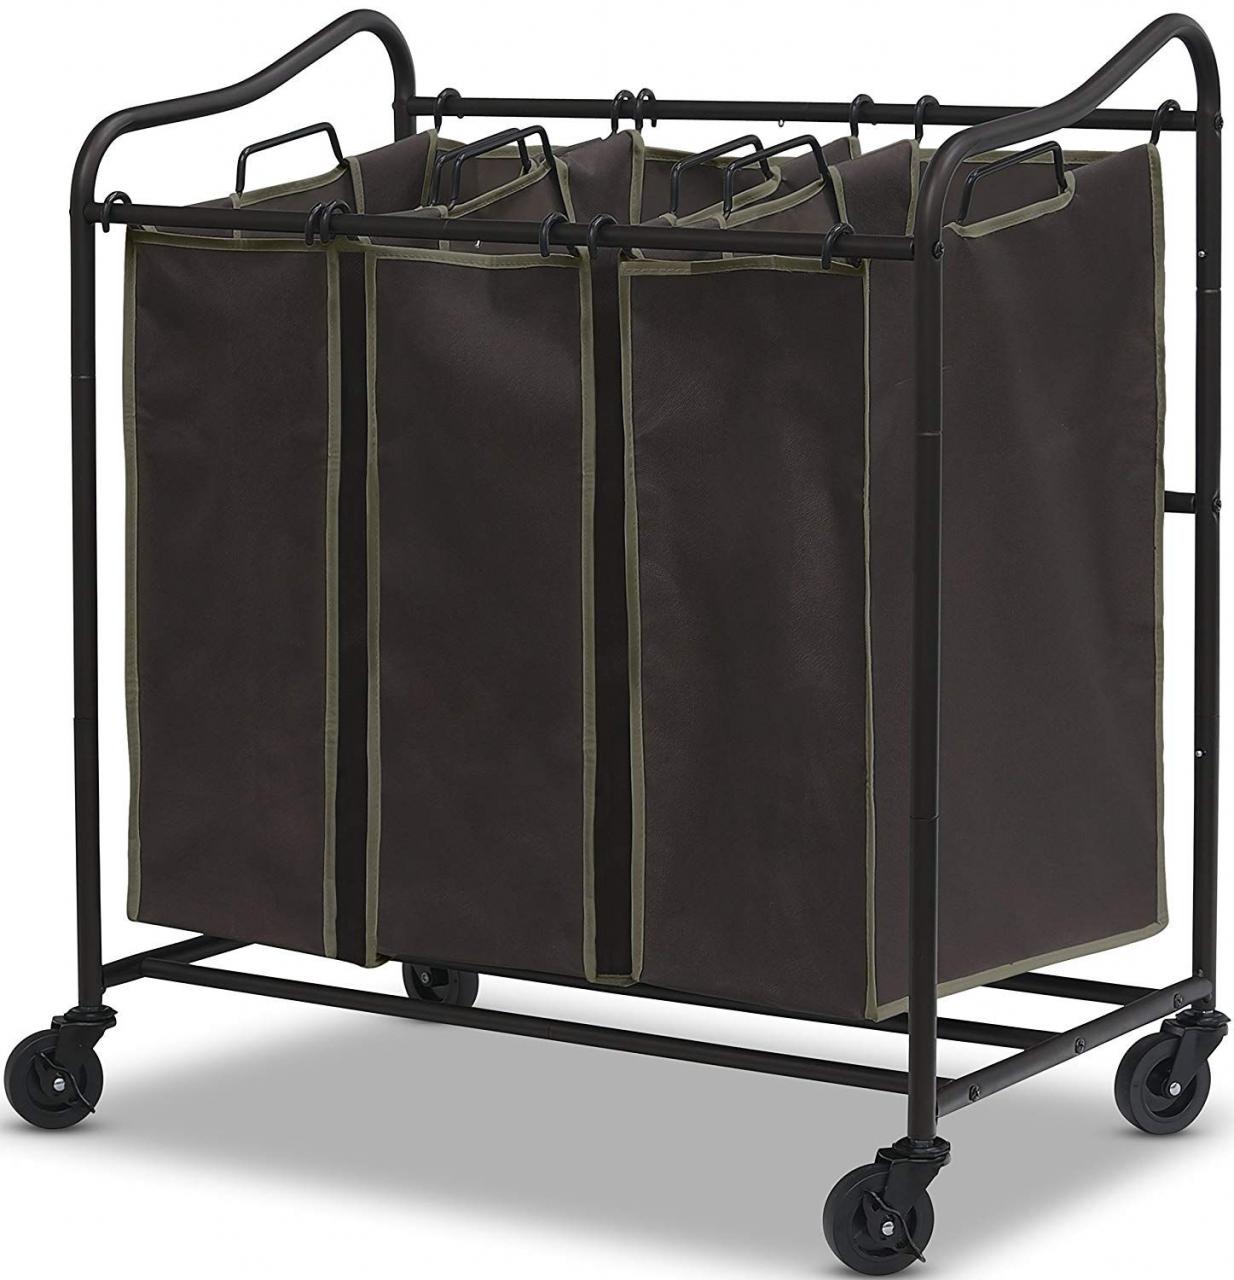 Simple Houseware Heavy Duty 3Bag Laundry Sorter Rolling Cart, Brown